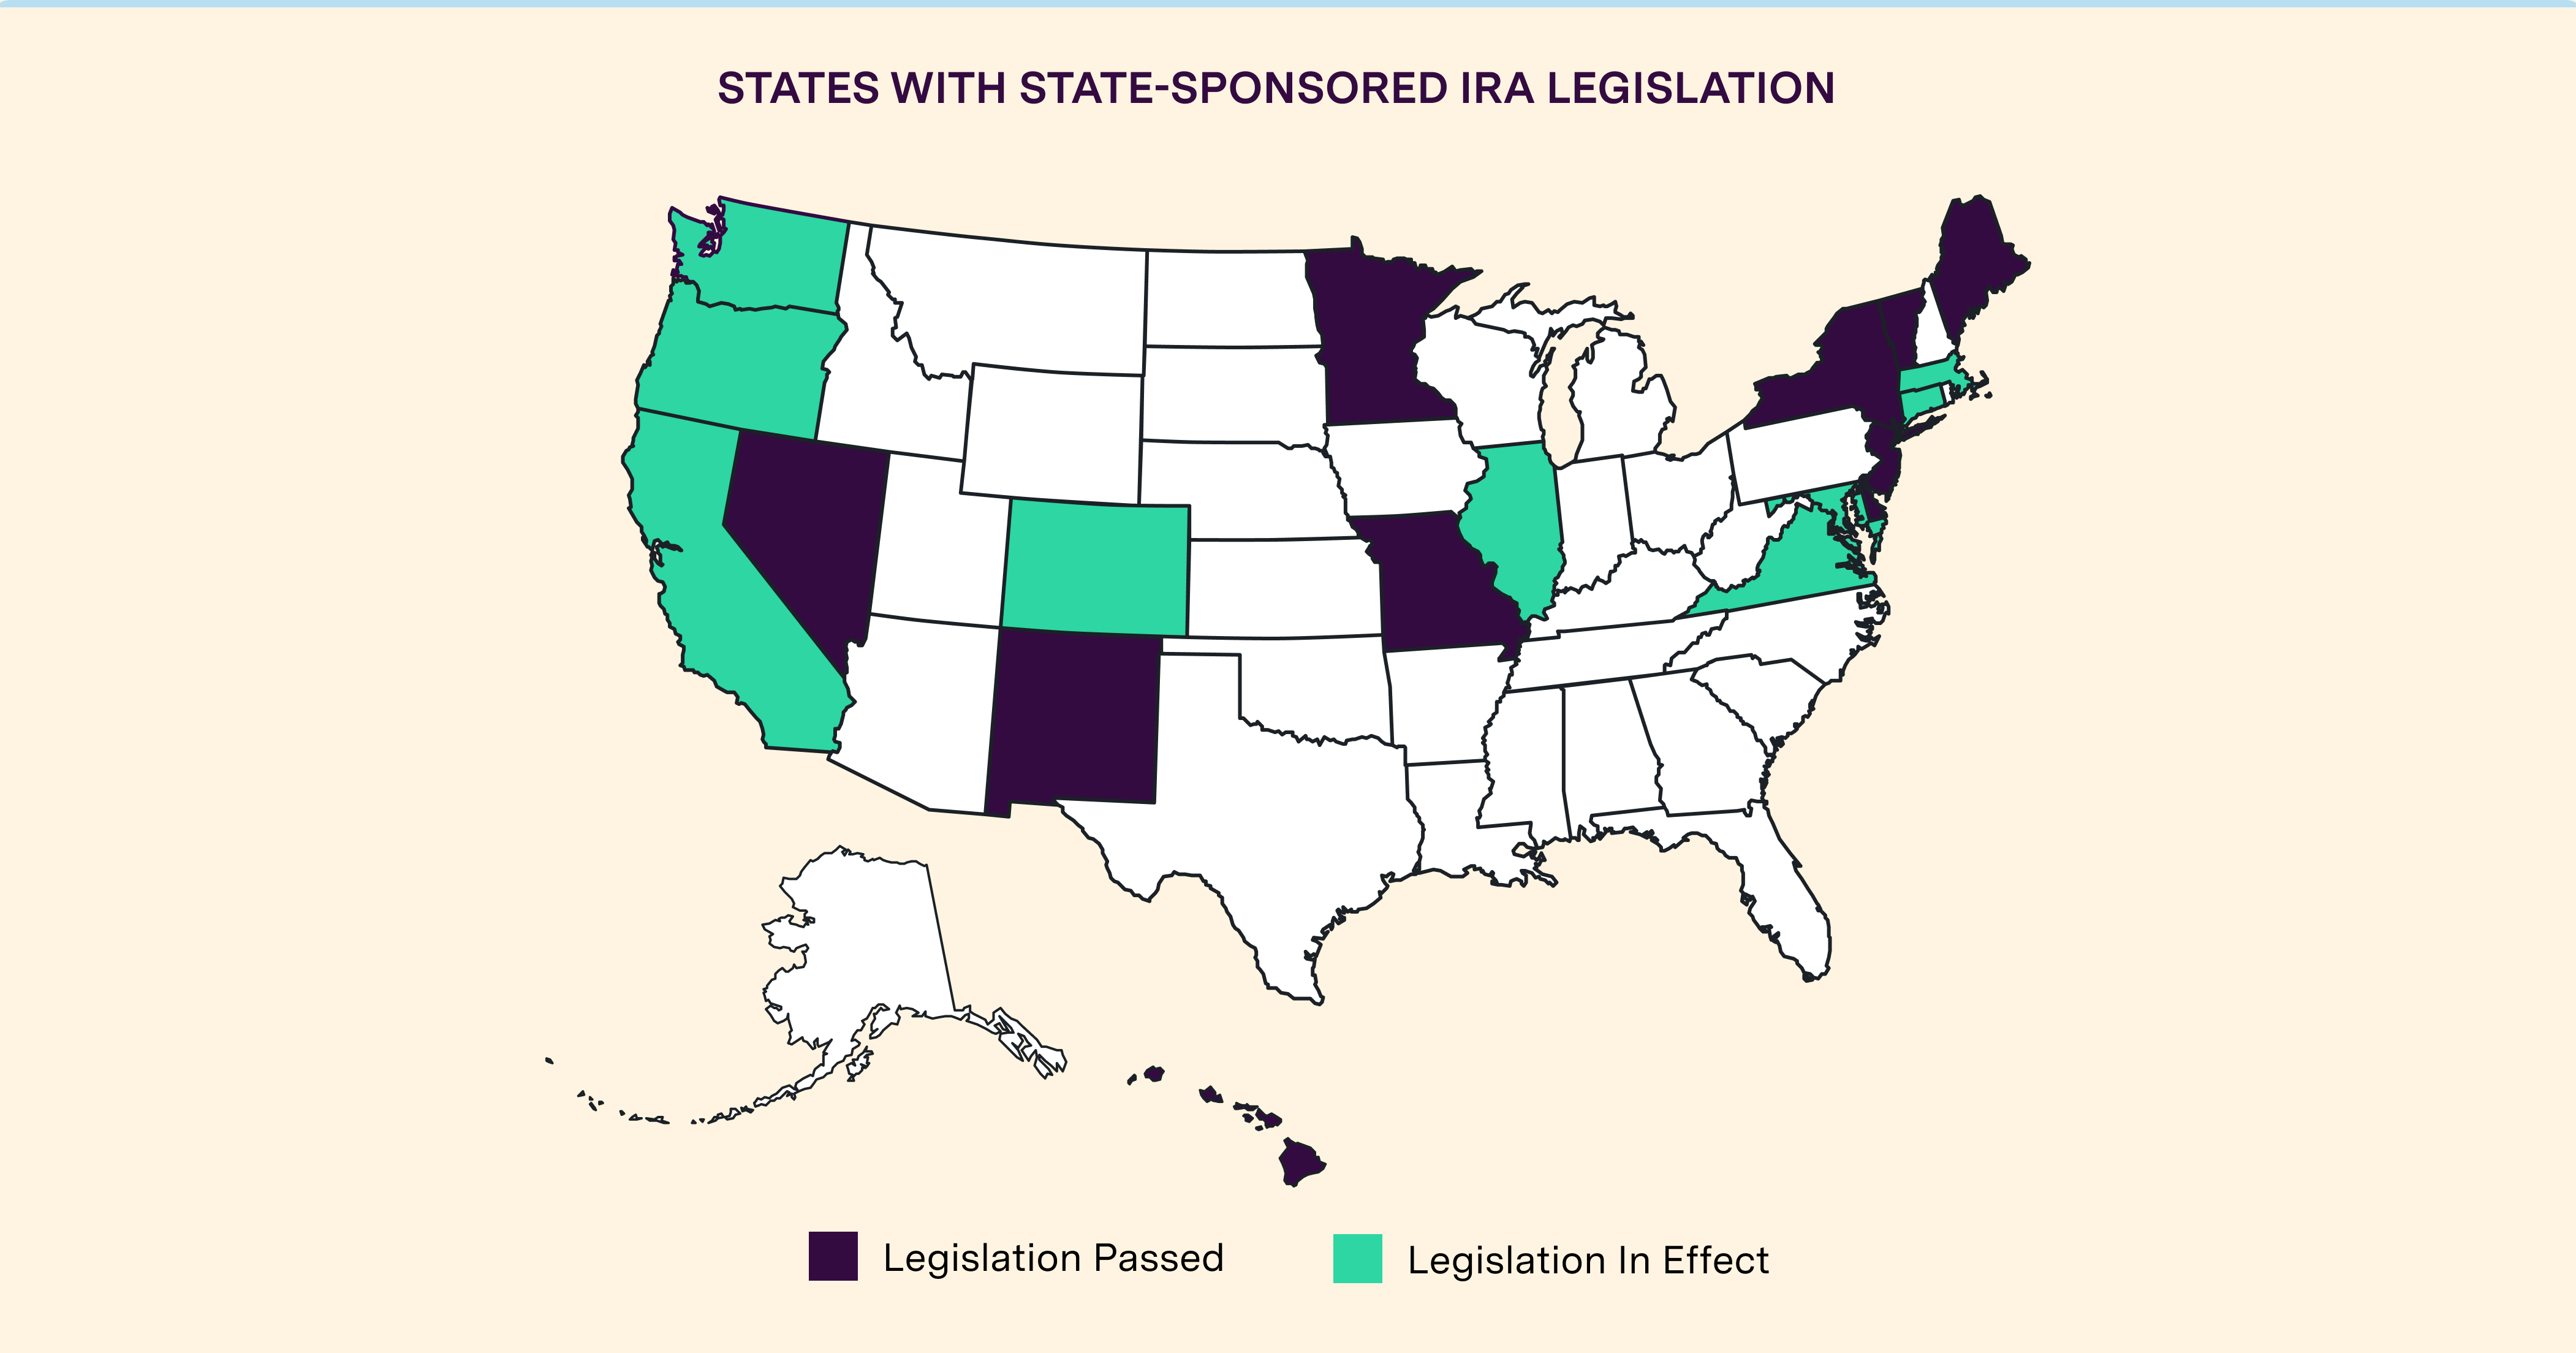 Map of state-sponsored IRA legislation status by state